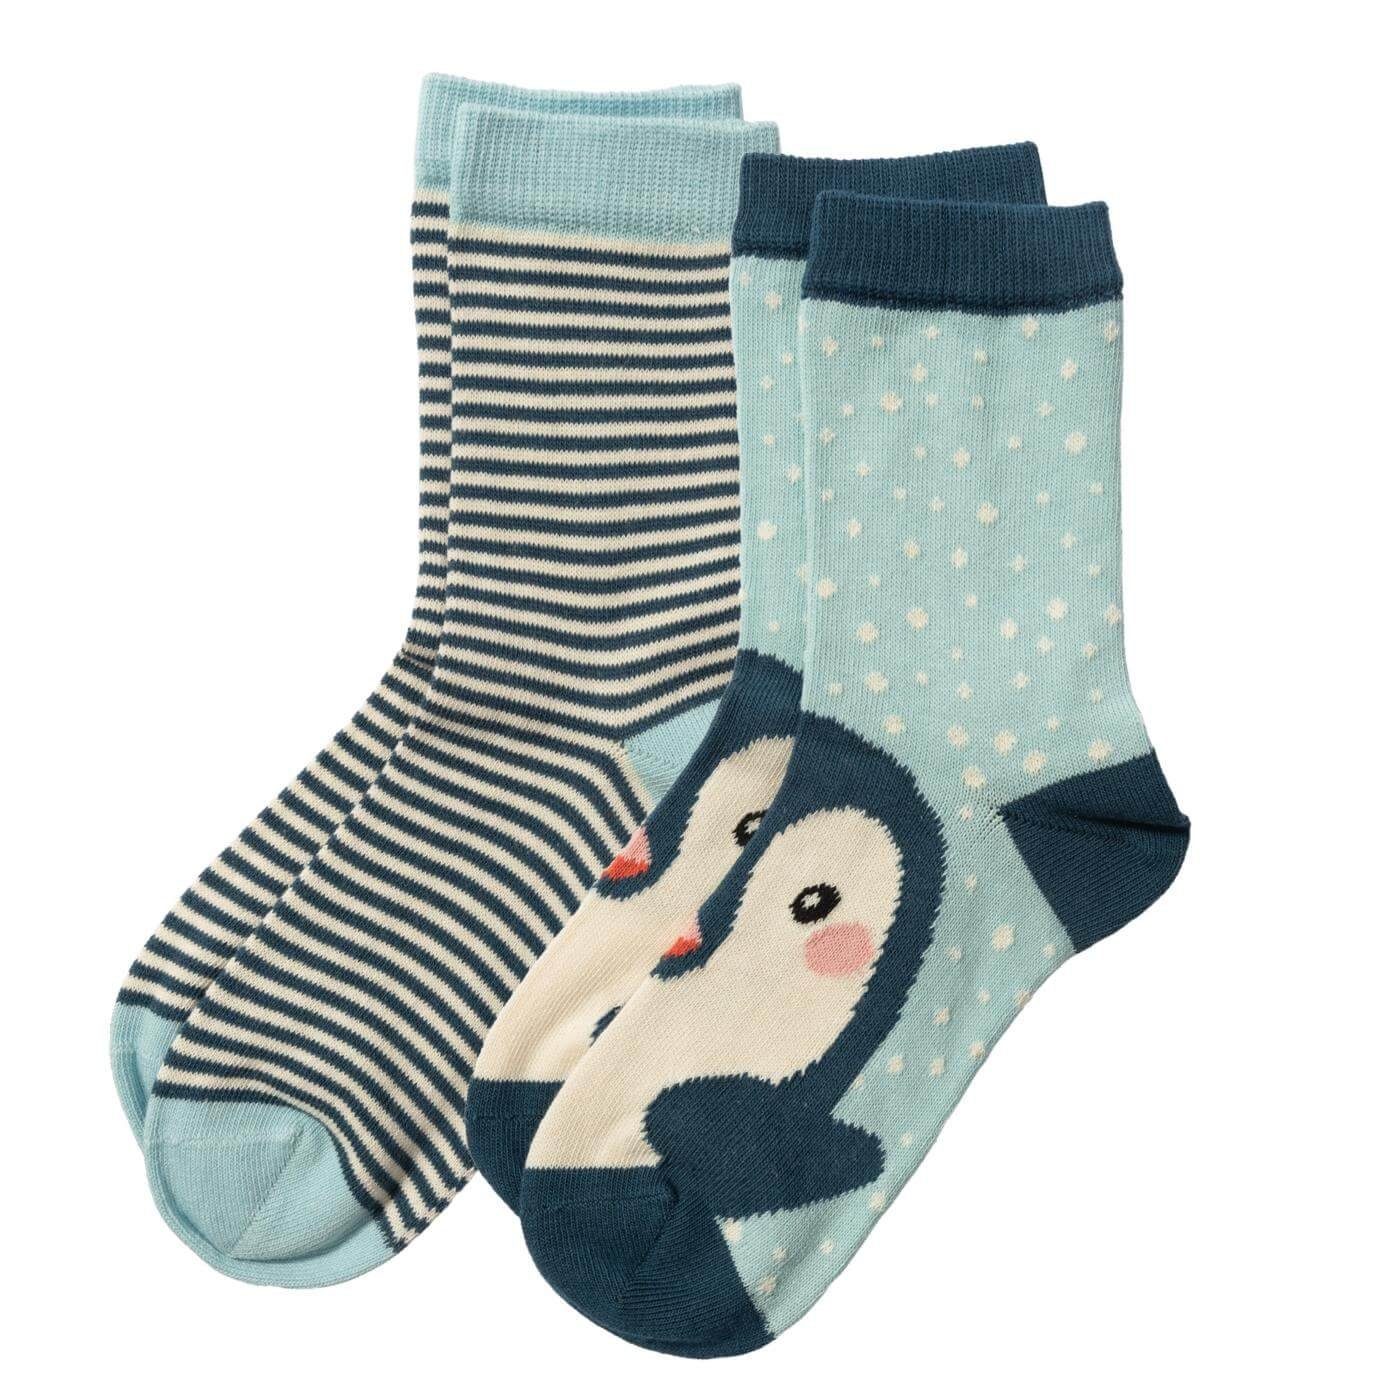 Little BEAR Penguin in Perfekte Kindersocken großer Auswahl Socken LIVING CRAFTS